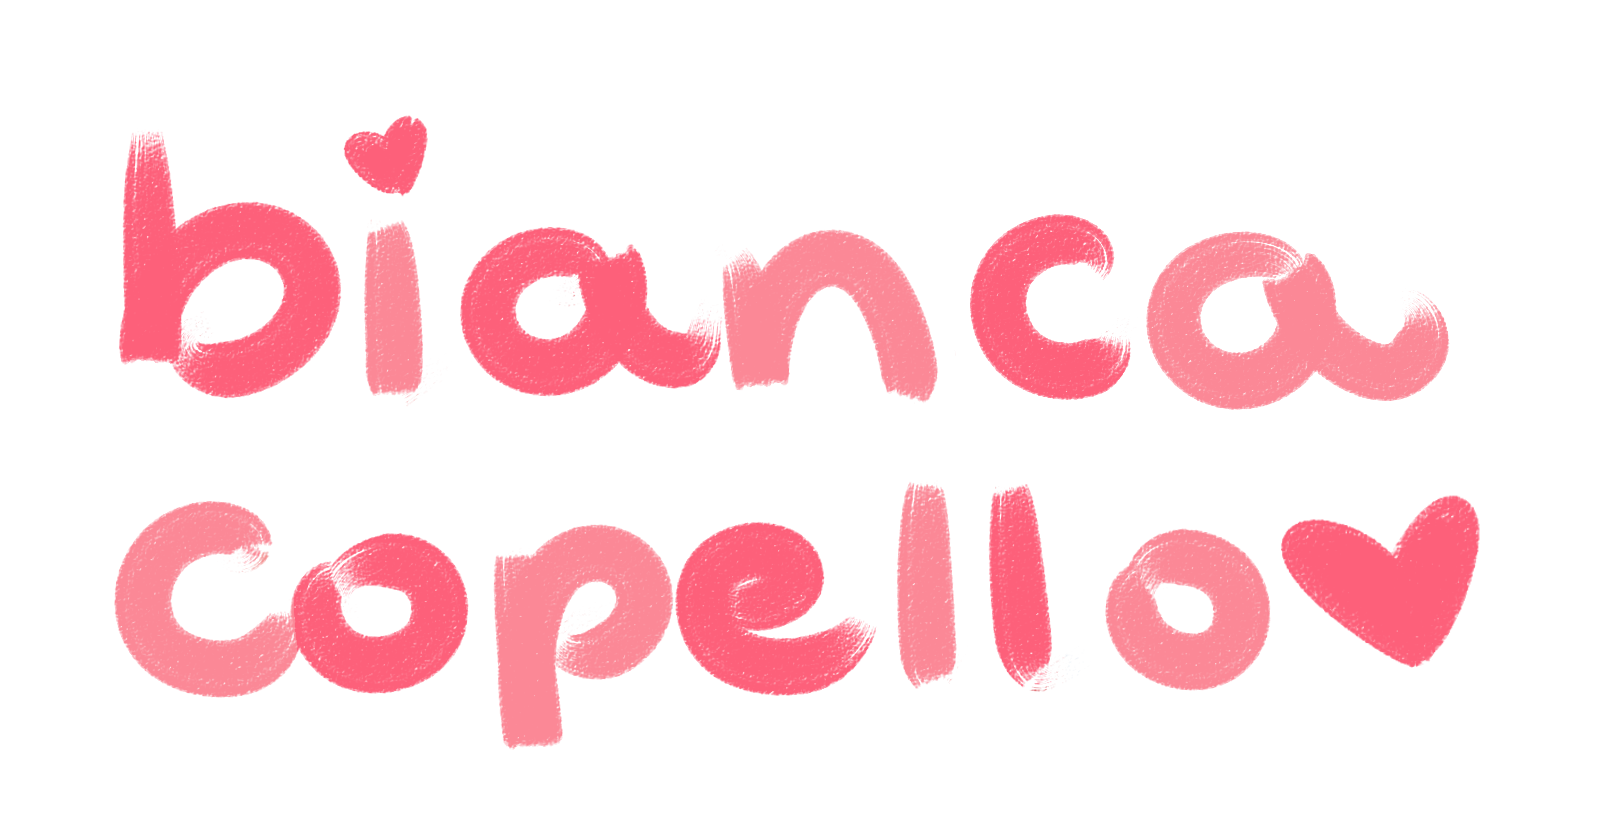 Bianca Copello